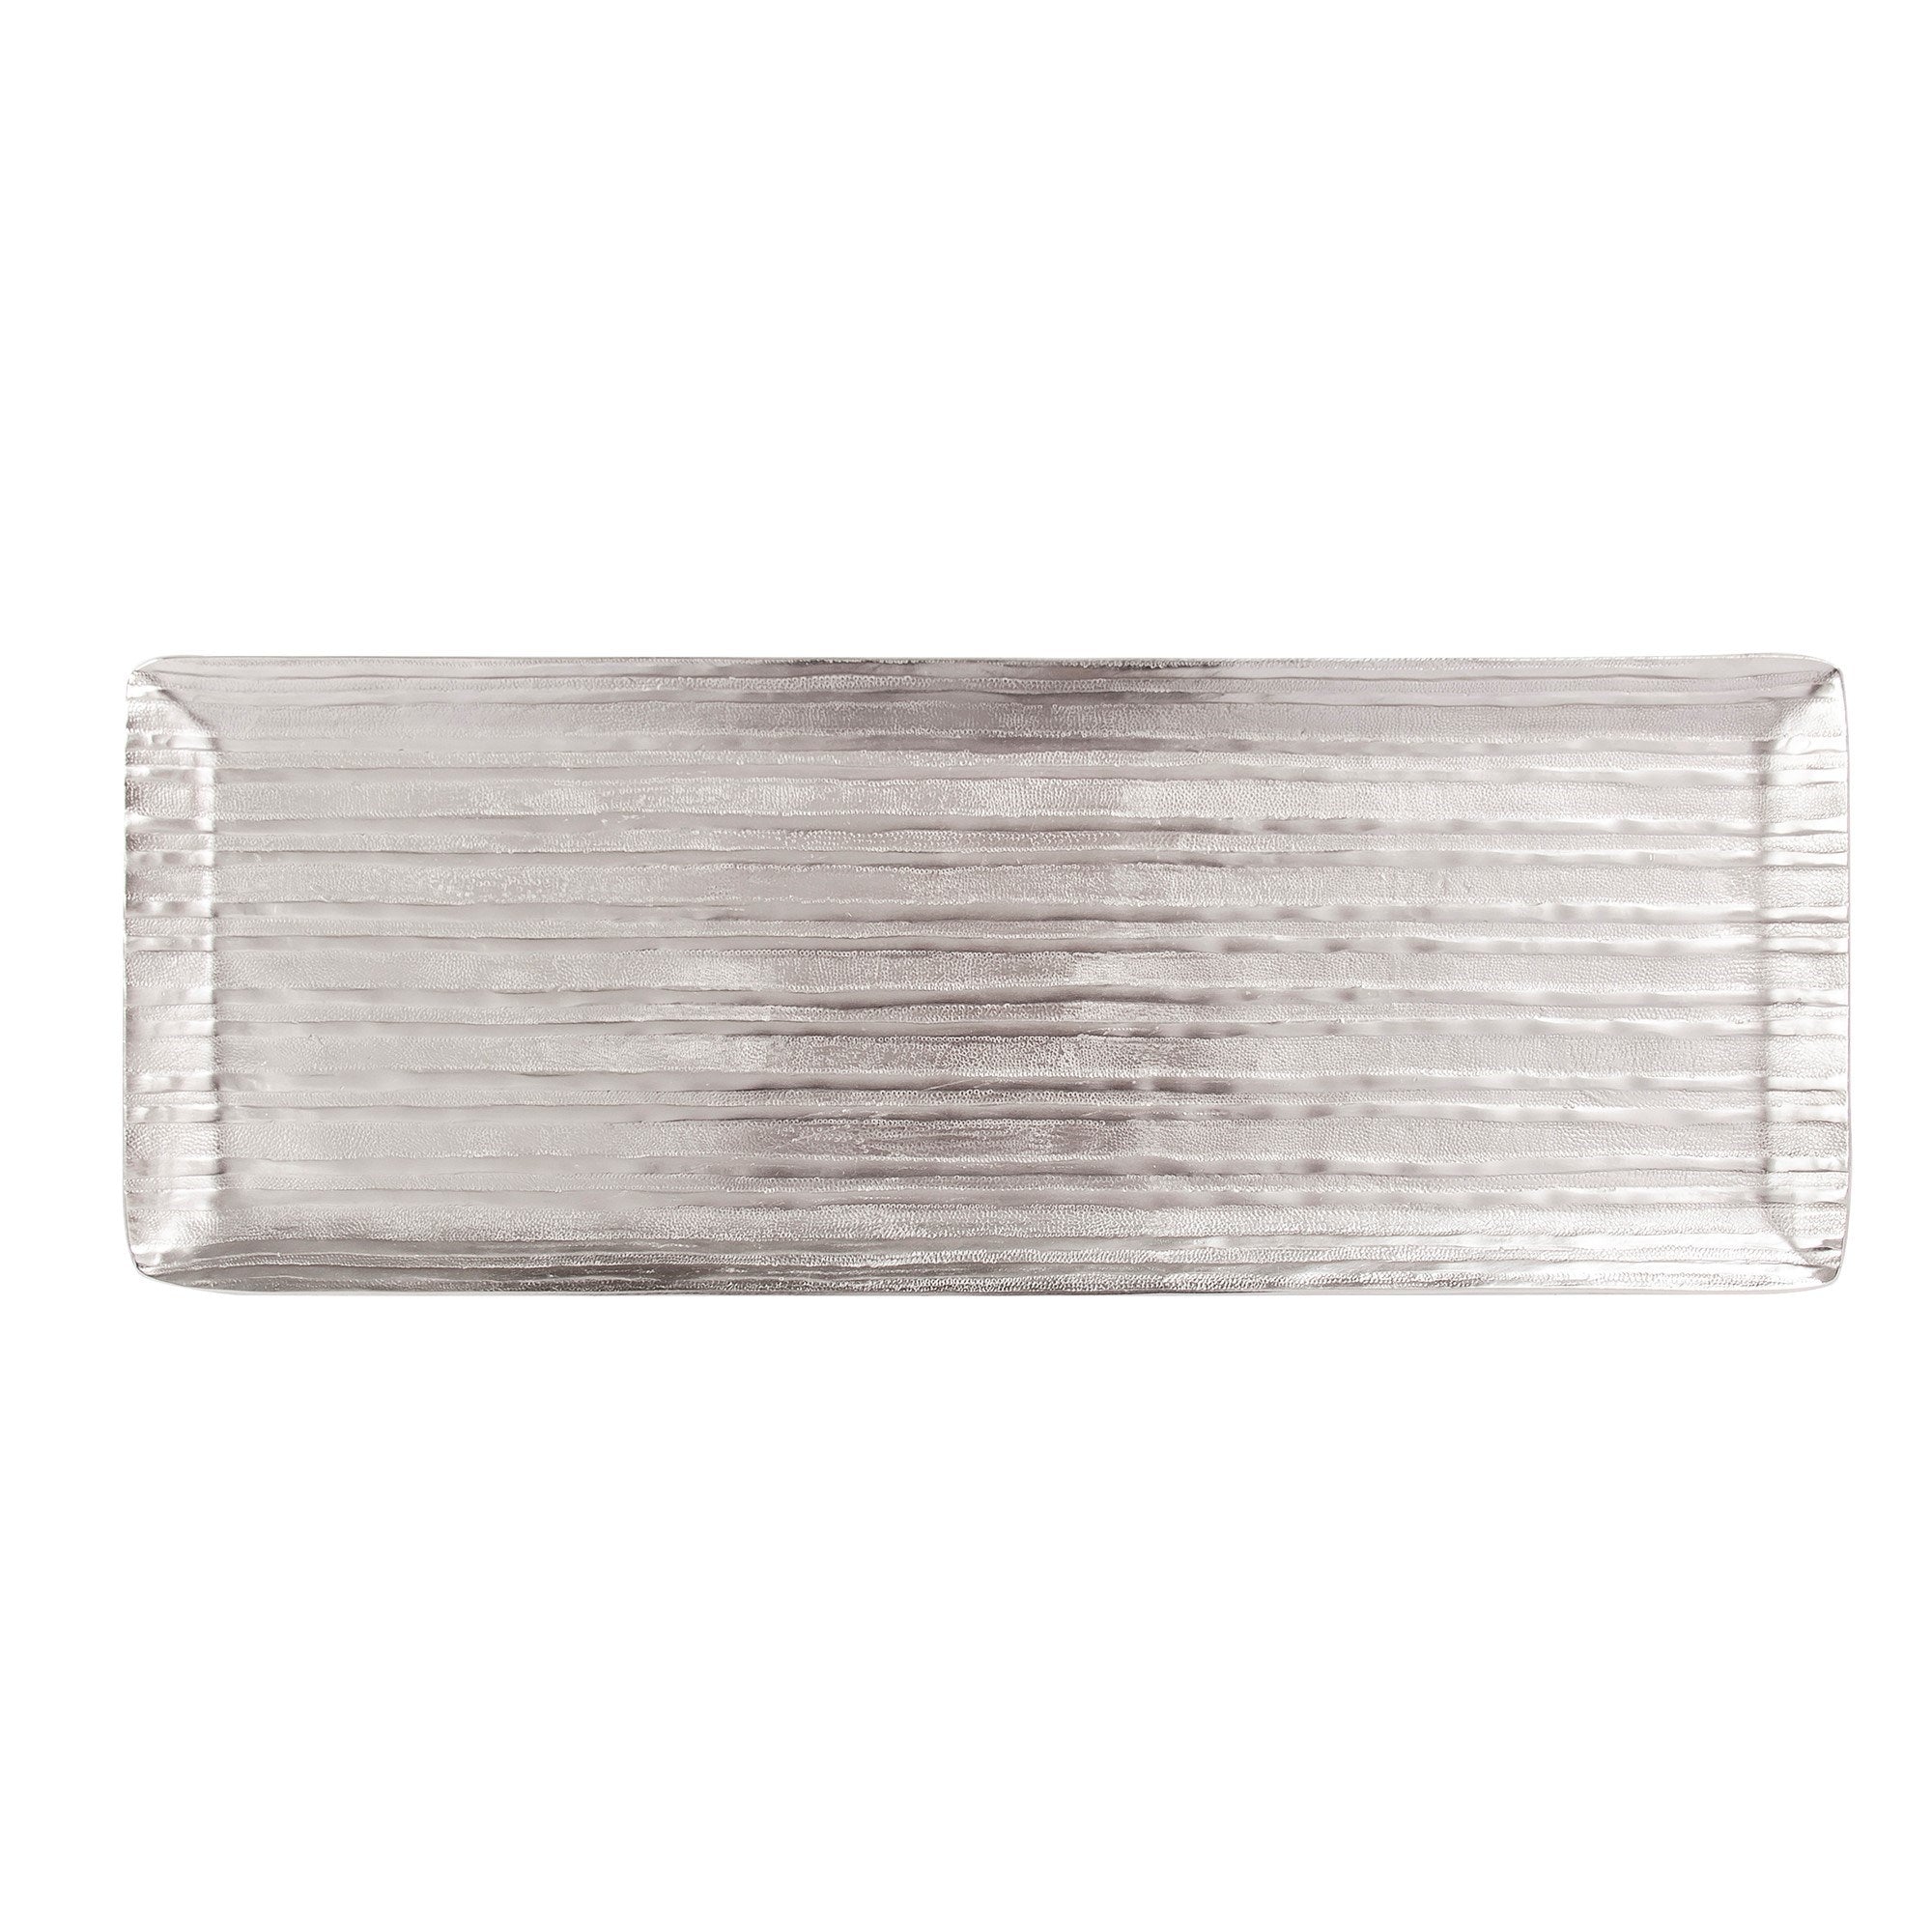 Chiseled Silver Tray, Large